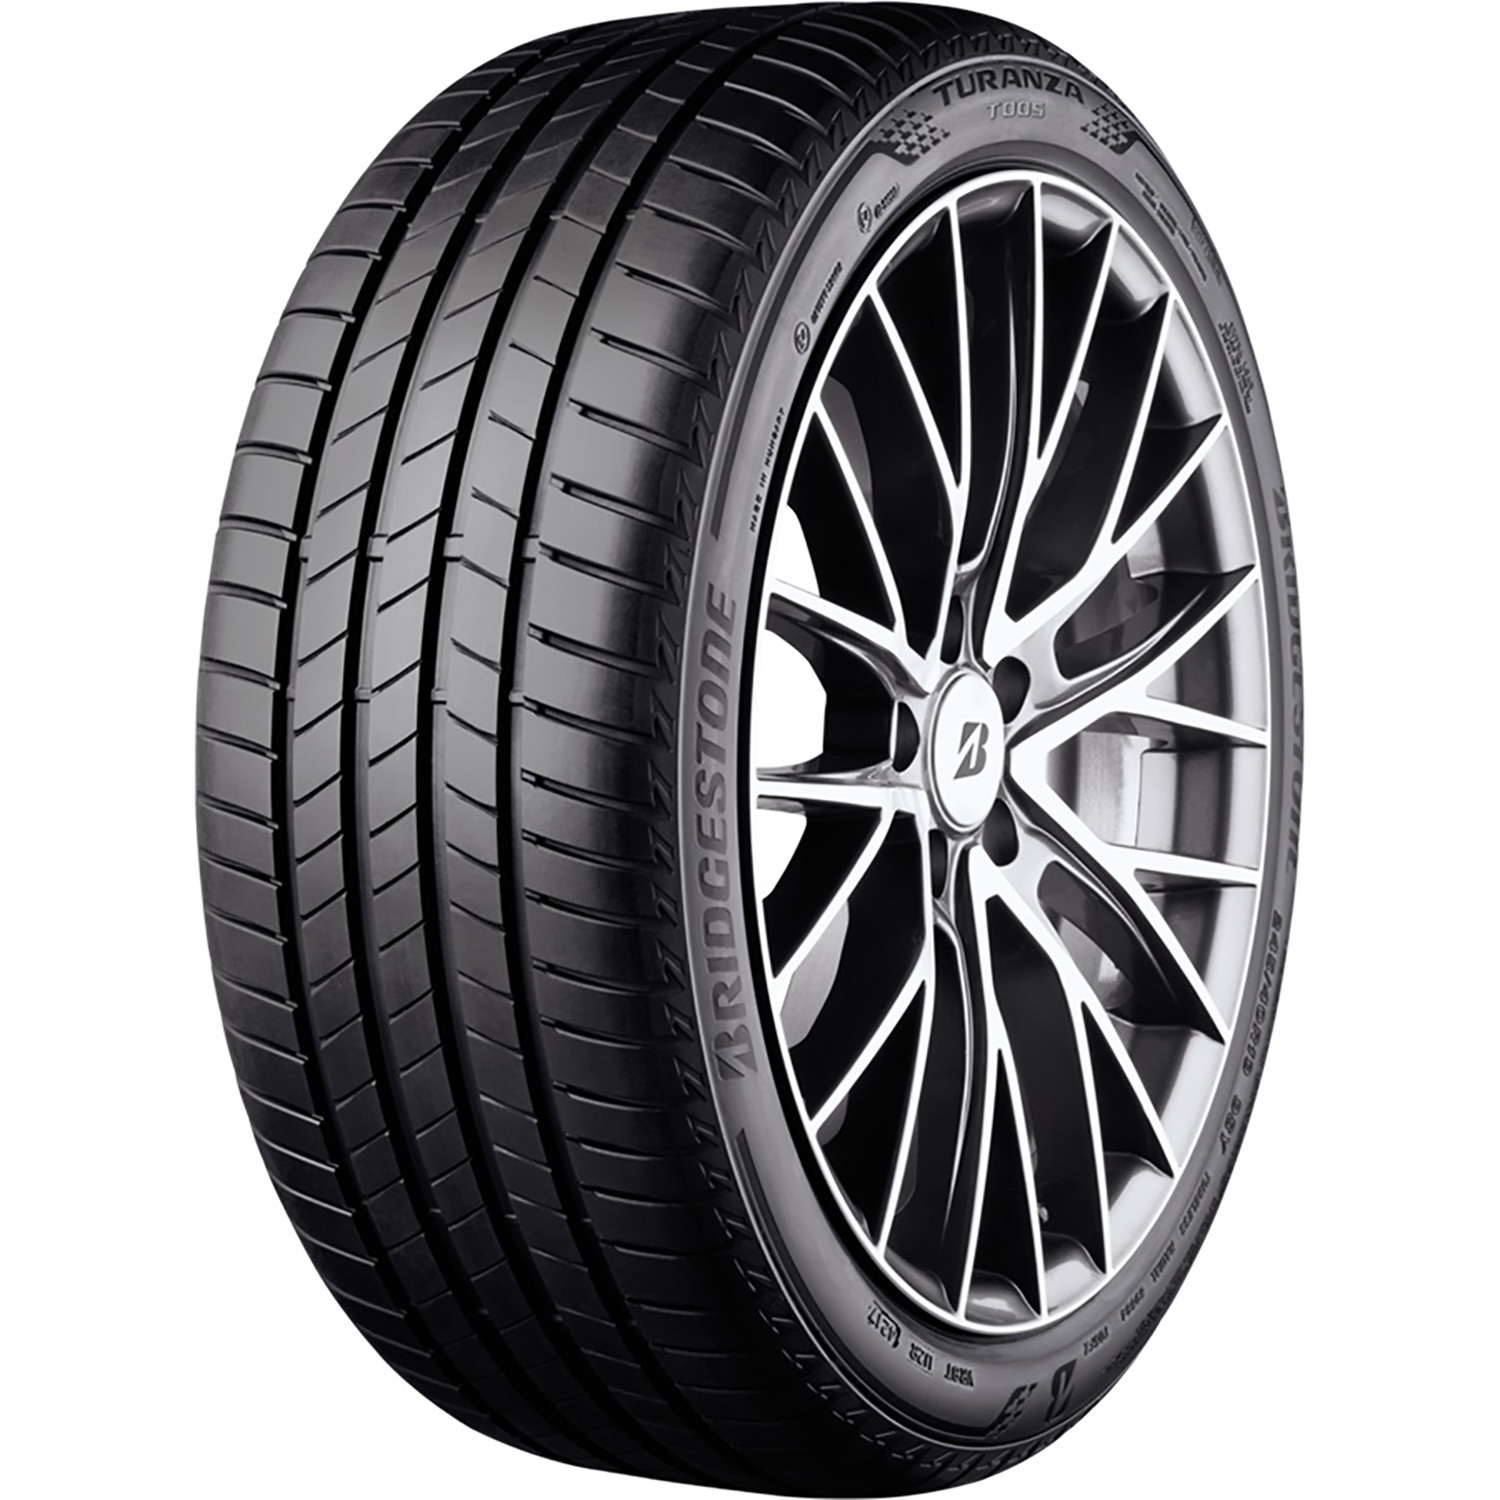 Автомобильная шина Bridgestone TURANZA T005 DRIVEGUARD Run Flat 245/45 R17 99Y turanza t005 driveguard runflat 195 55 r16 91v